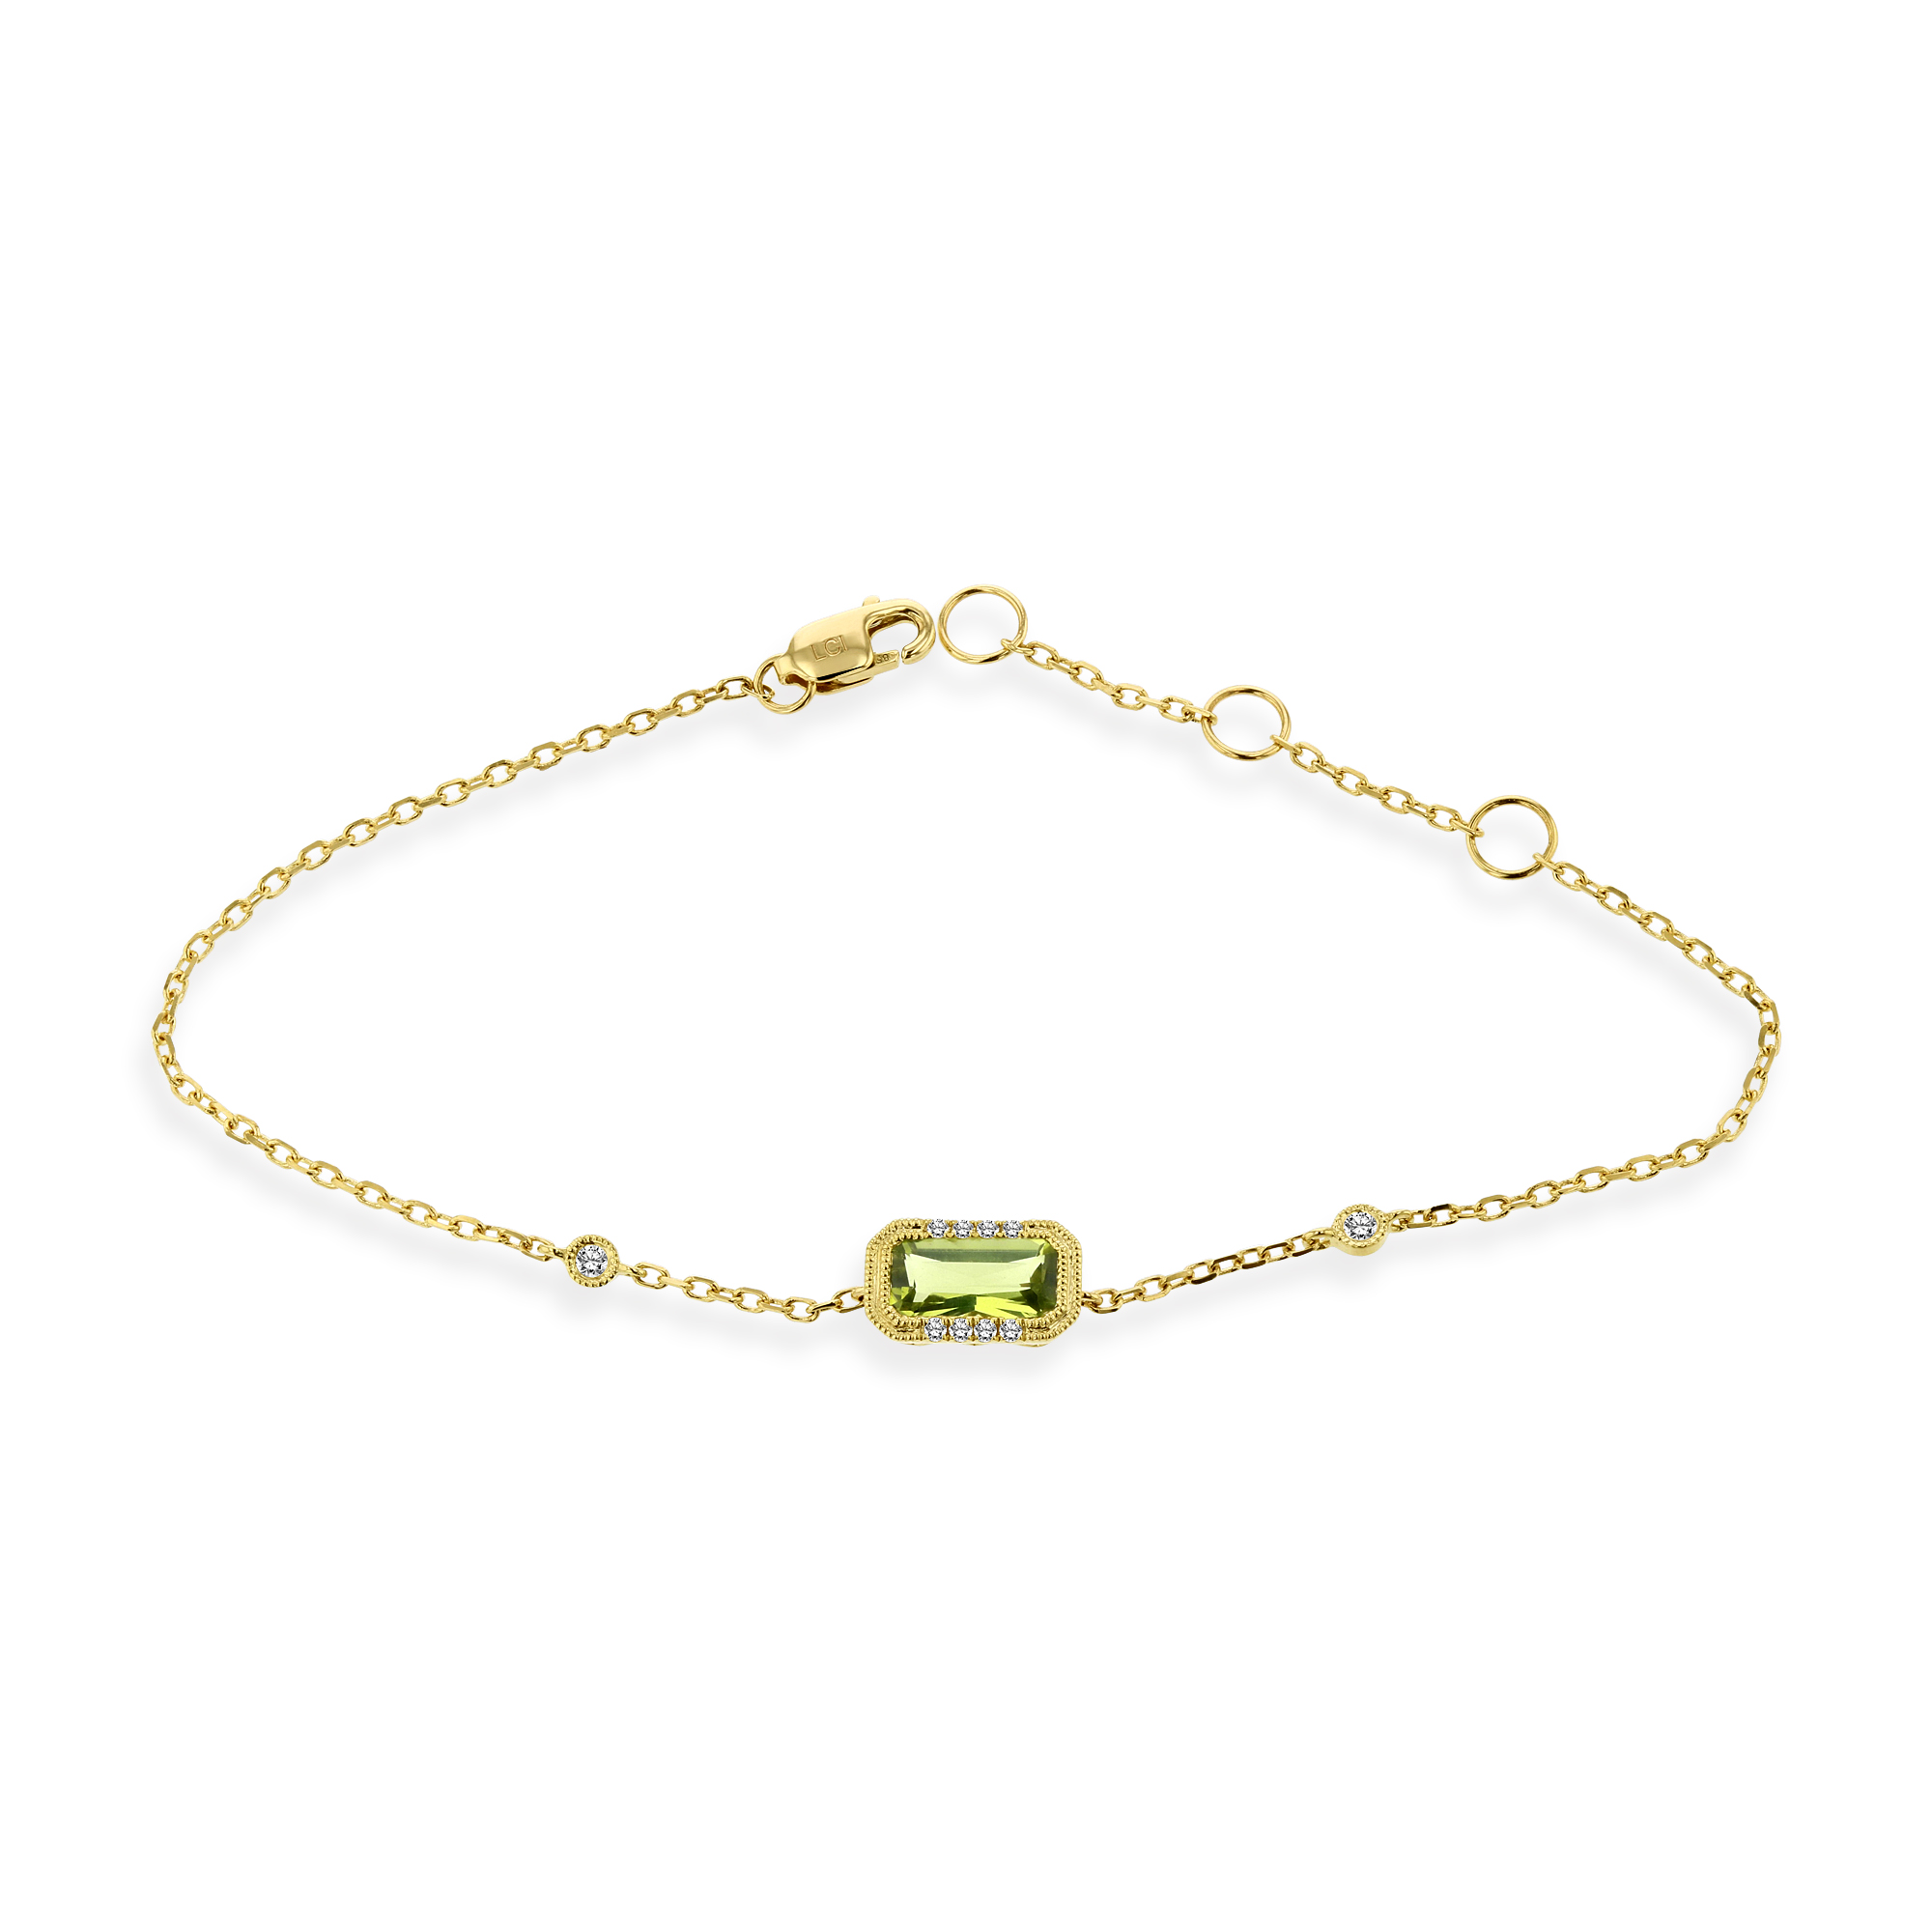 View 0.13ctw Diamond and Peridot Fashion Bracelet in 14k White Gold